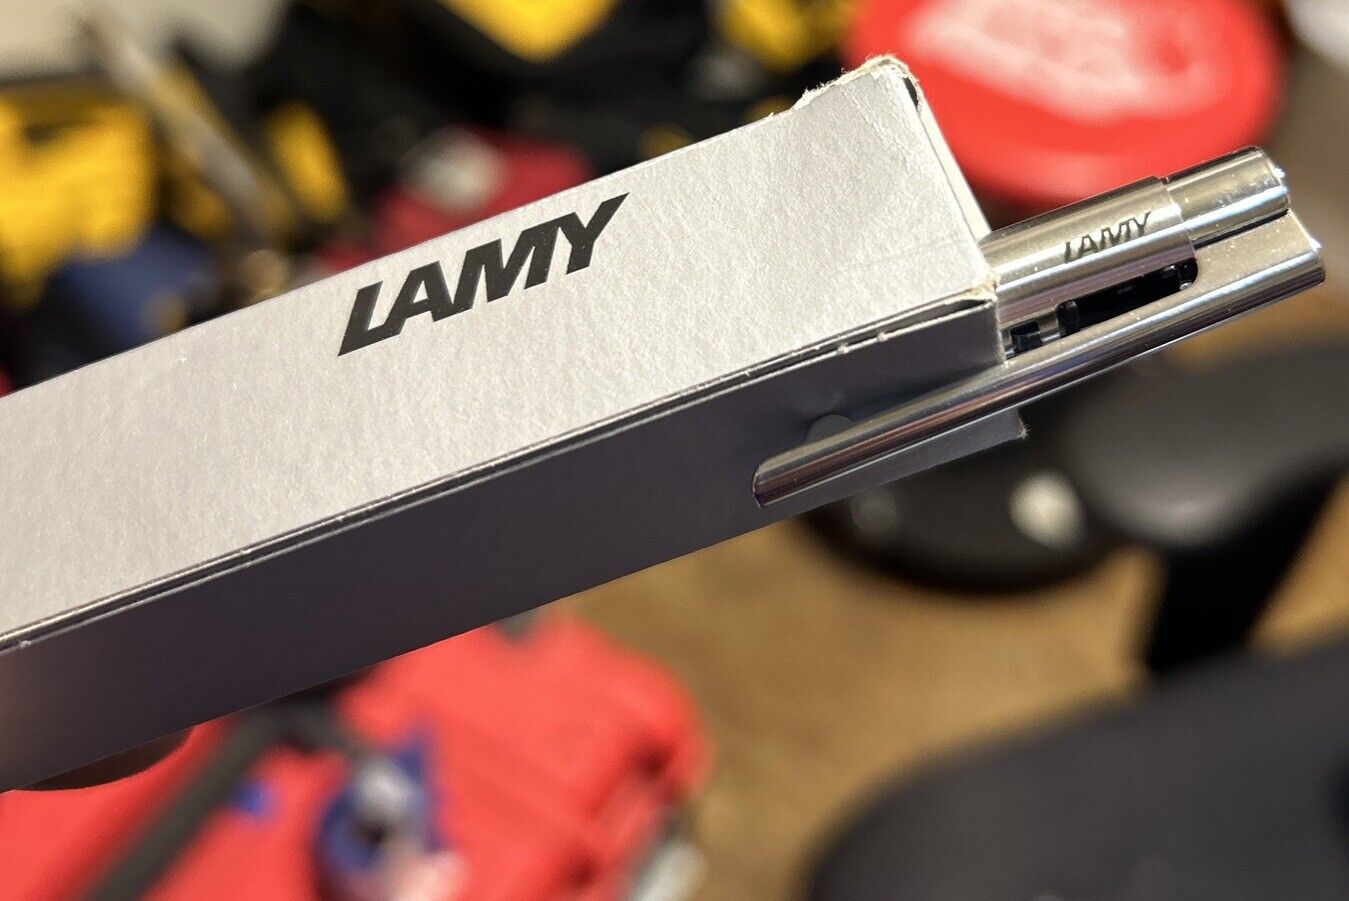 Lamy Logo Ballpoint Pen - Brushed Stainless Steel - L206 - Brand New in Lamy Box